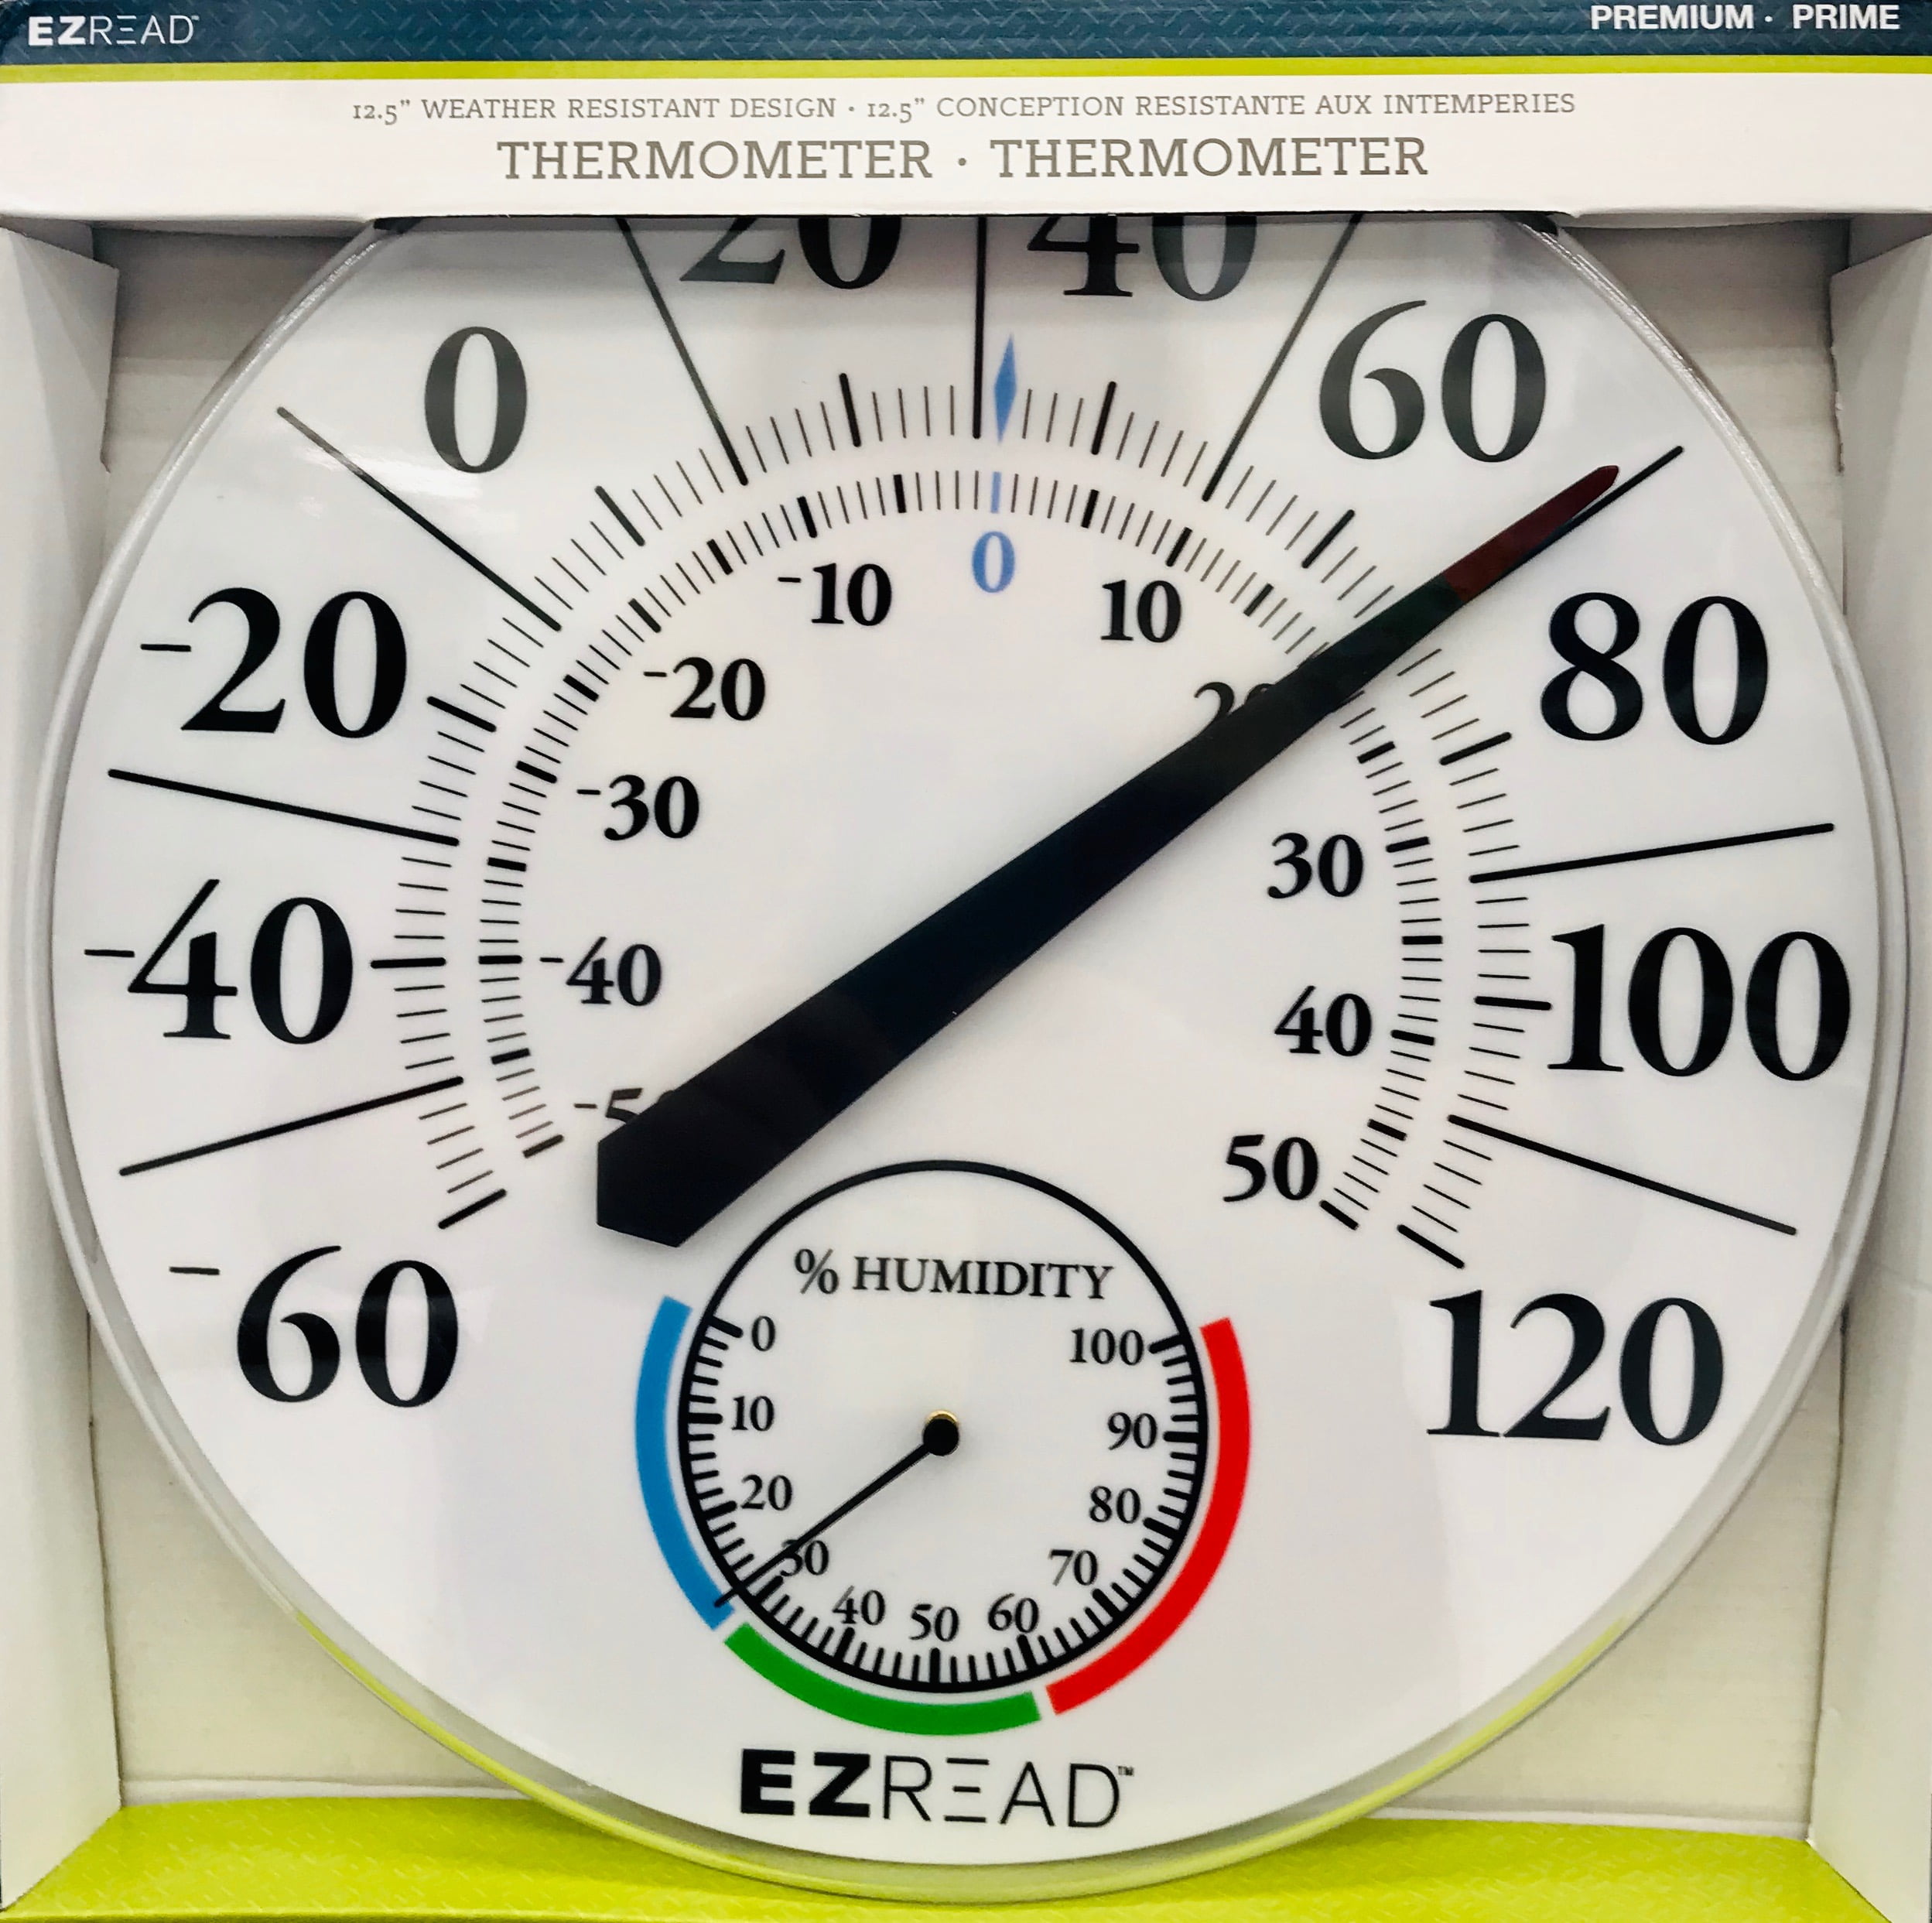 Wall Thermometer, Farenheit & Celsius - Eisco Labs